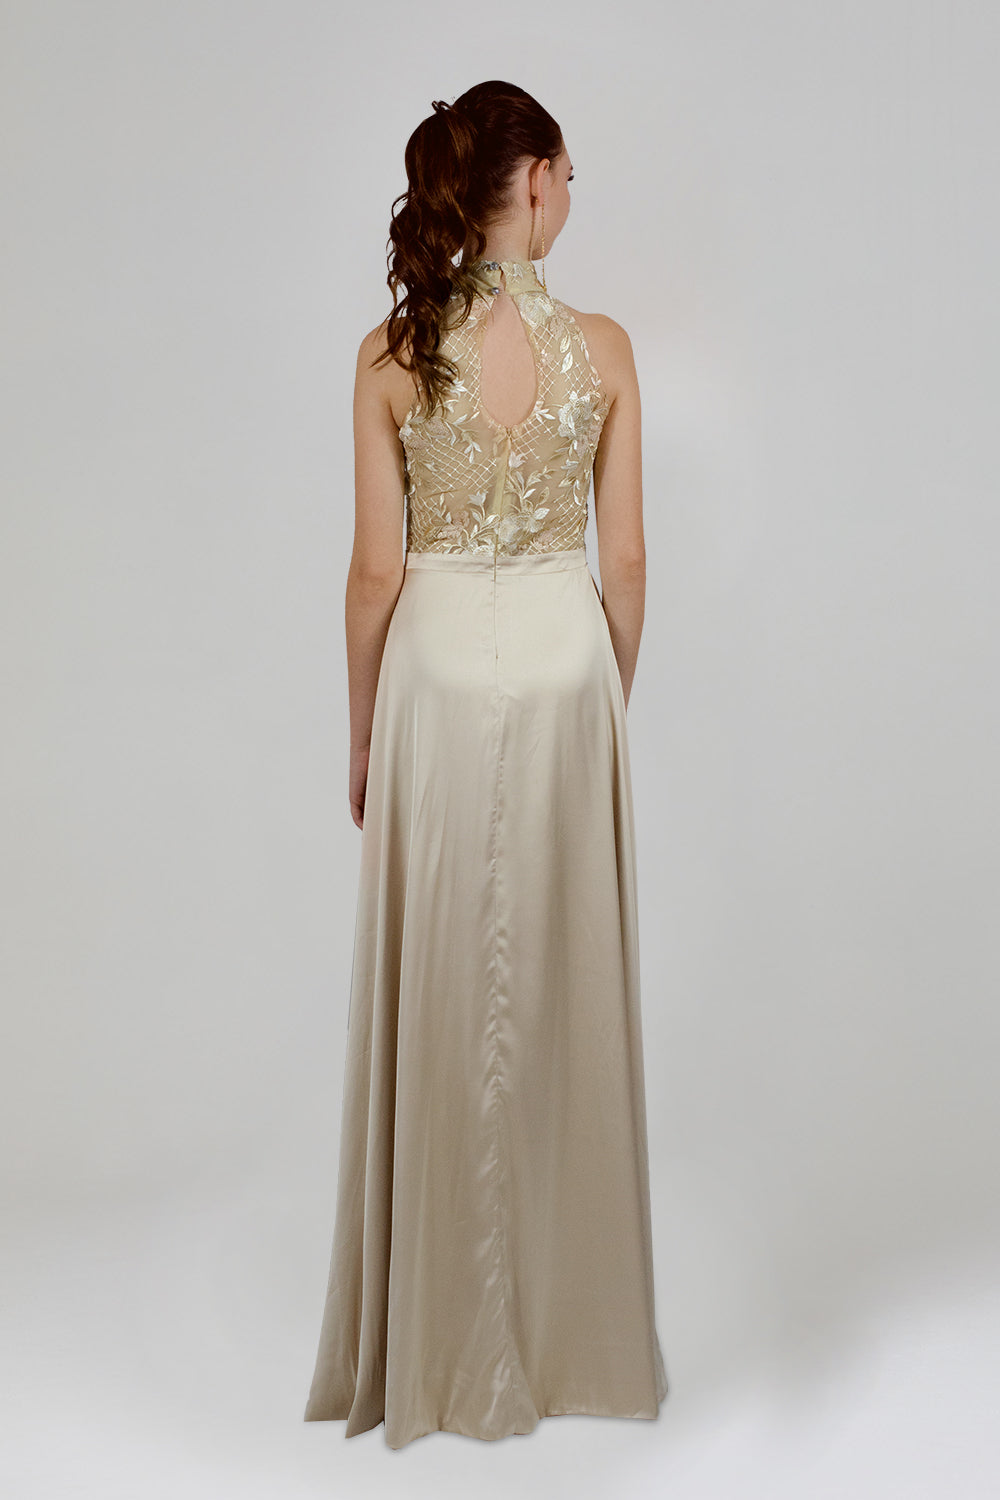 custom made gold satin bridesmaid dresses perth australia dressmaker online envious bridal & formal